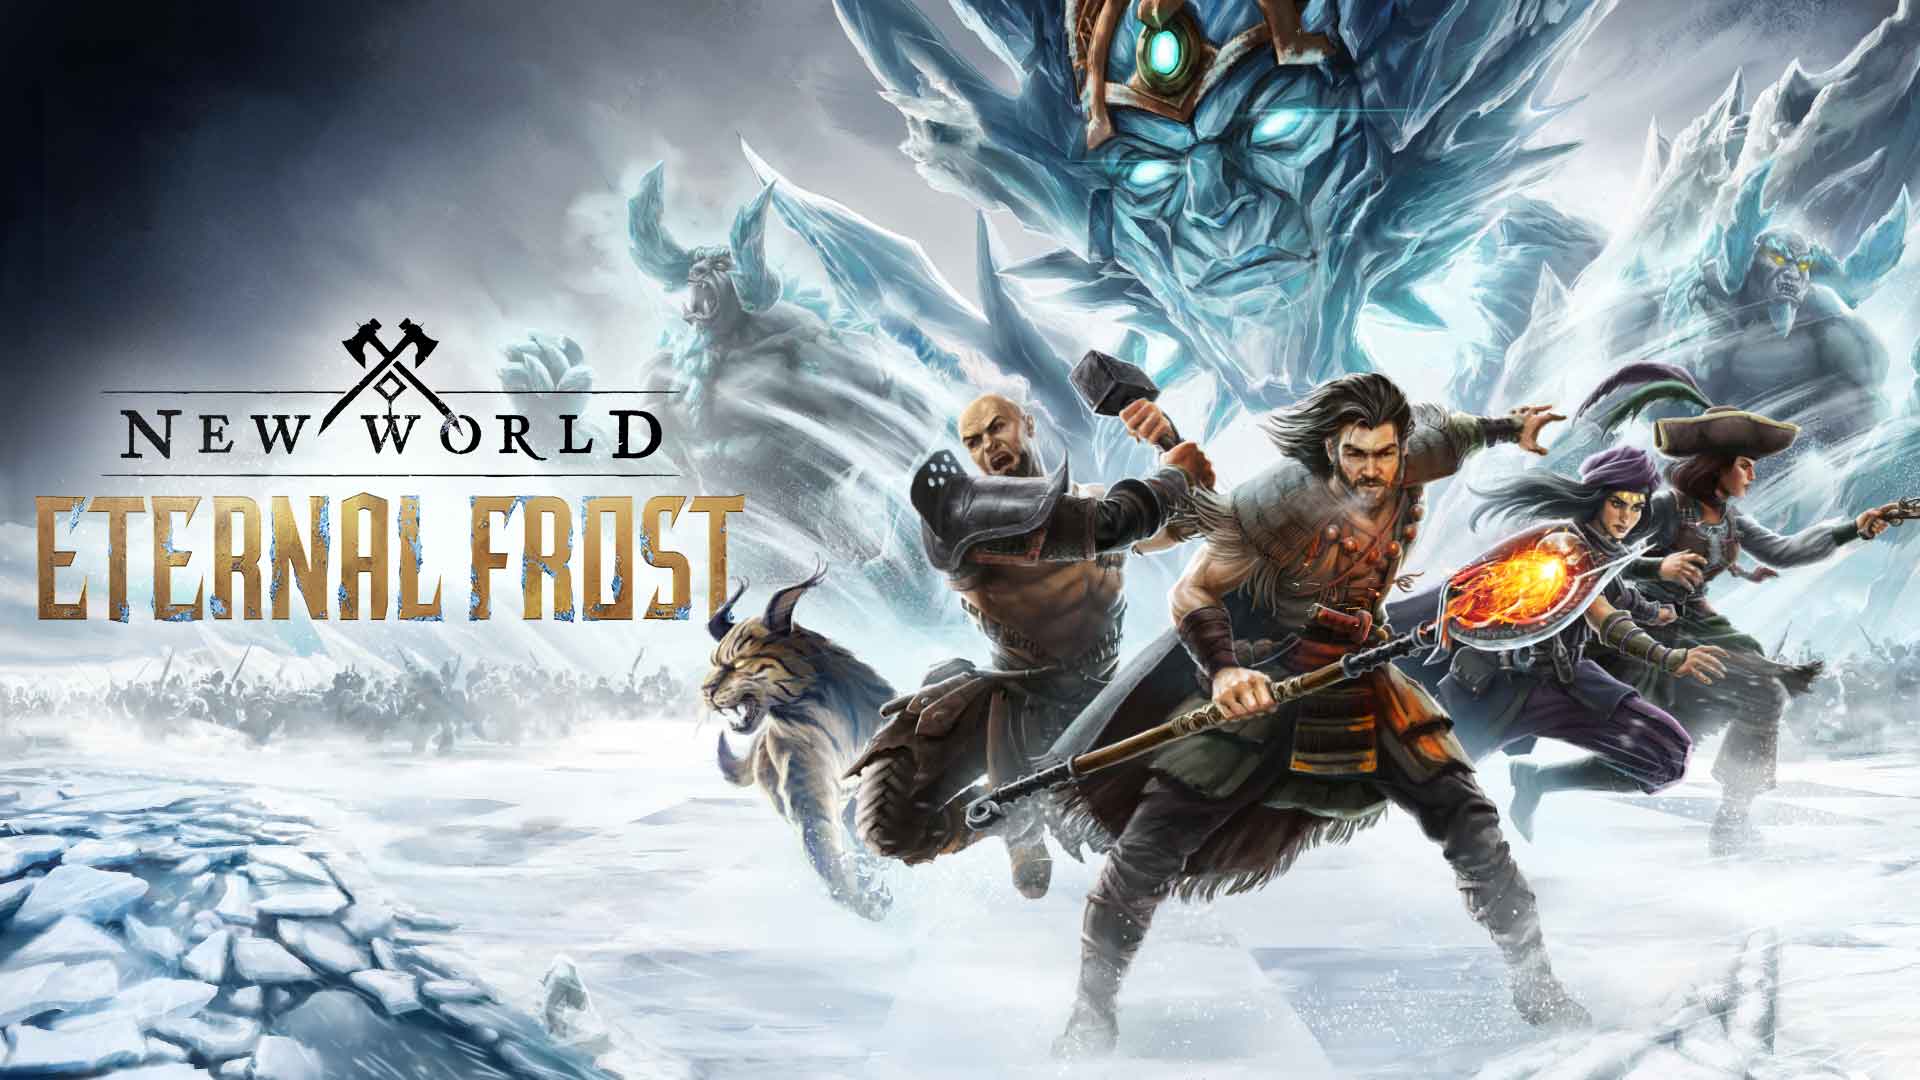 PTR: Eternal Frost - News  New World - Open World MMO PC Game